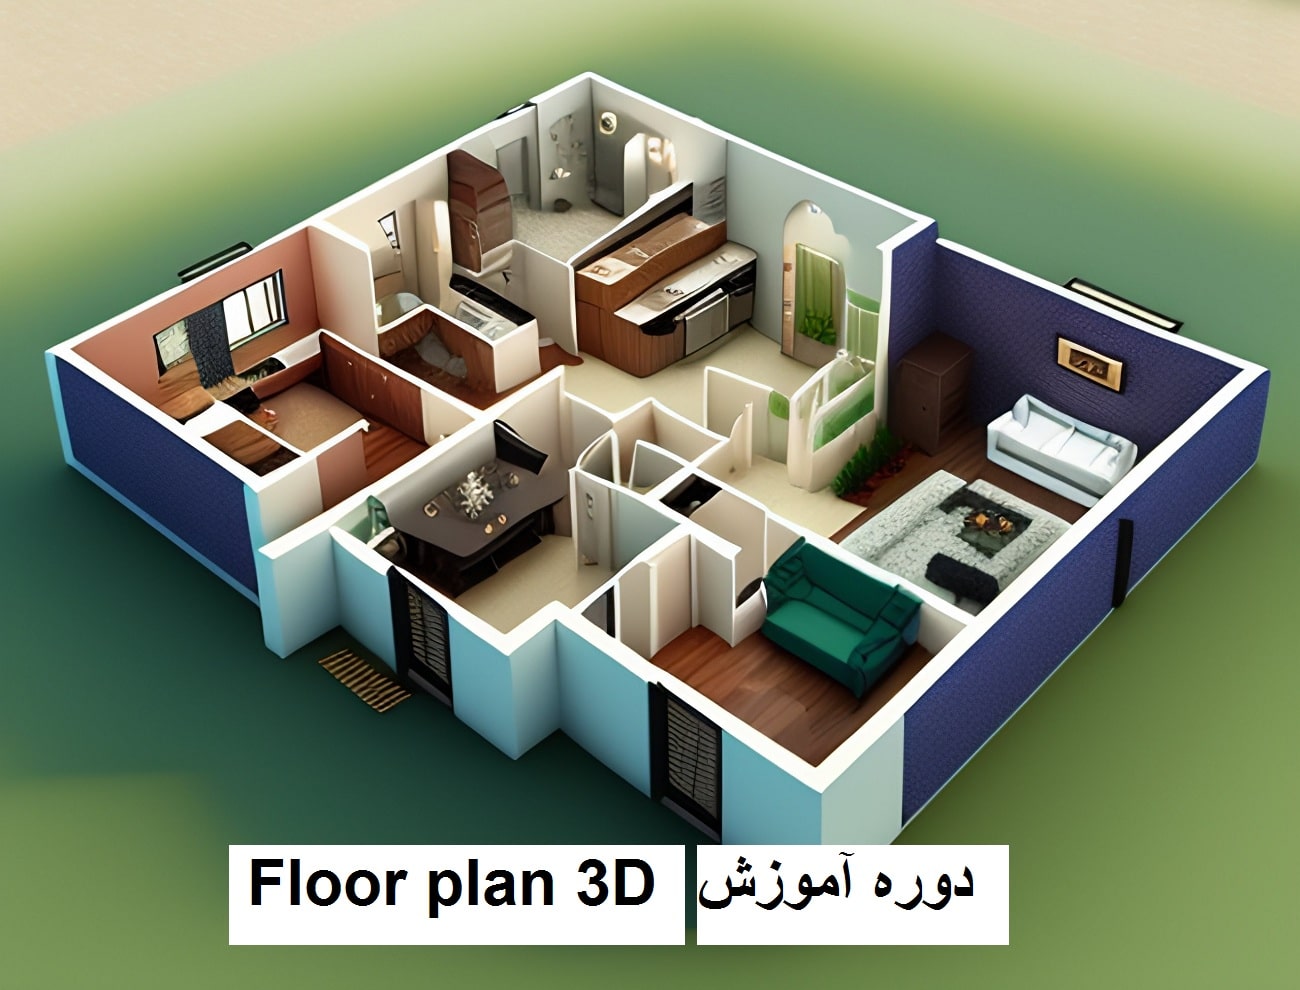 دوره آموزش مجازی Floor plan 3D